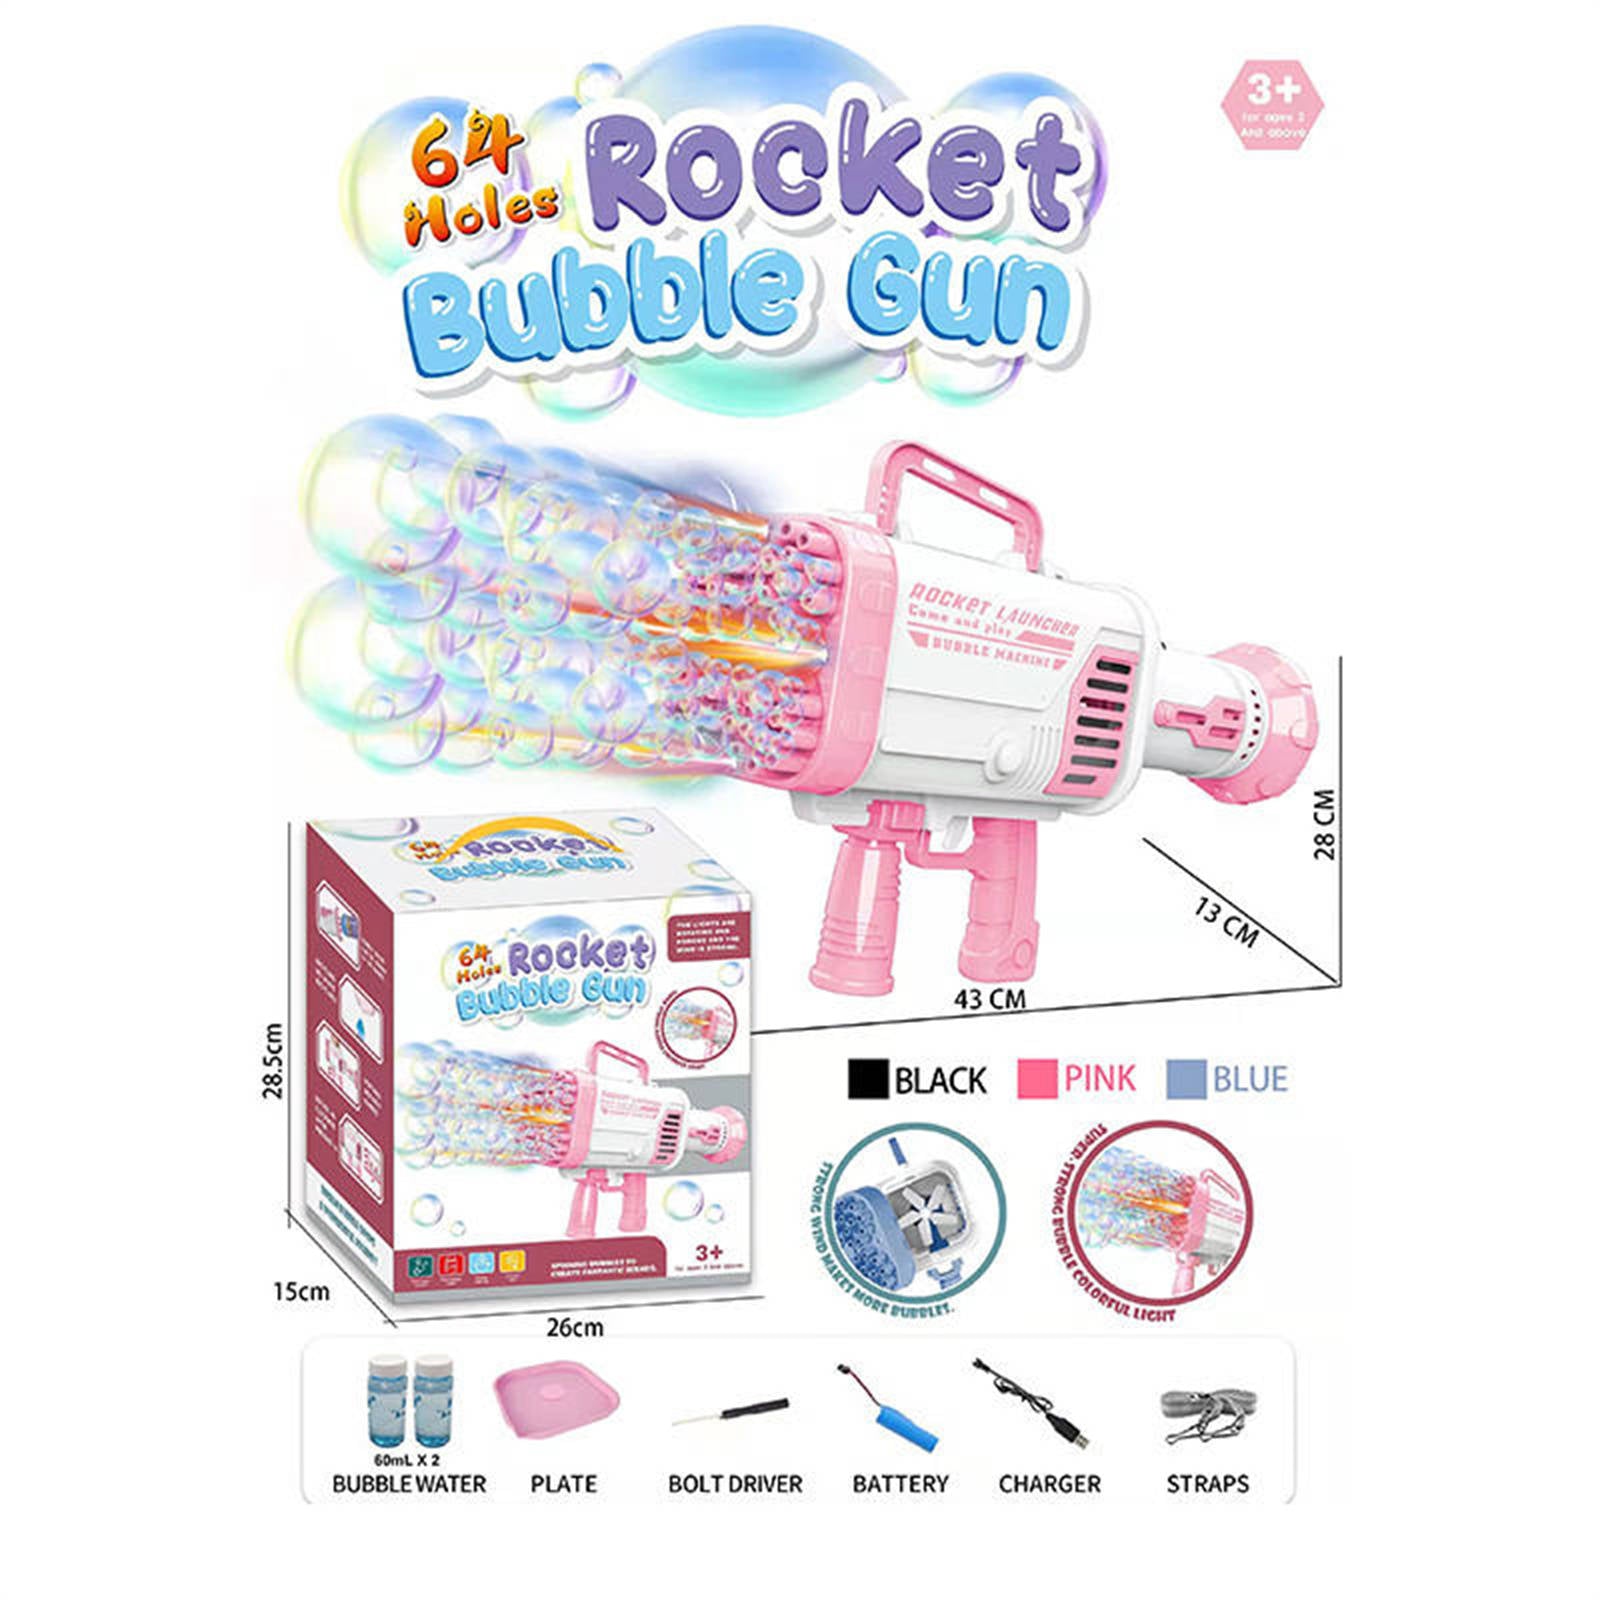 Bubblerainbow 64 Hole Electric Bubble Gun Hand-Held Soap Water Bubble Machine Colorful Light